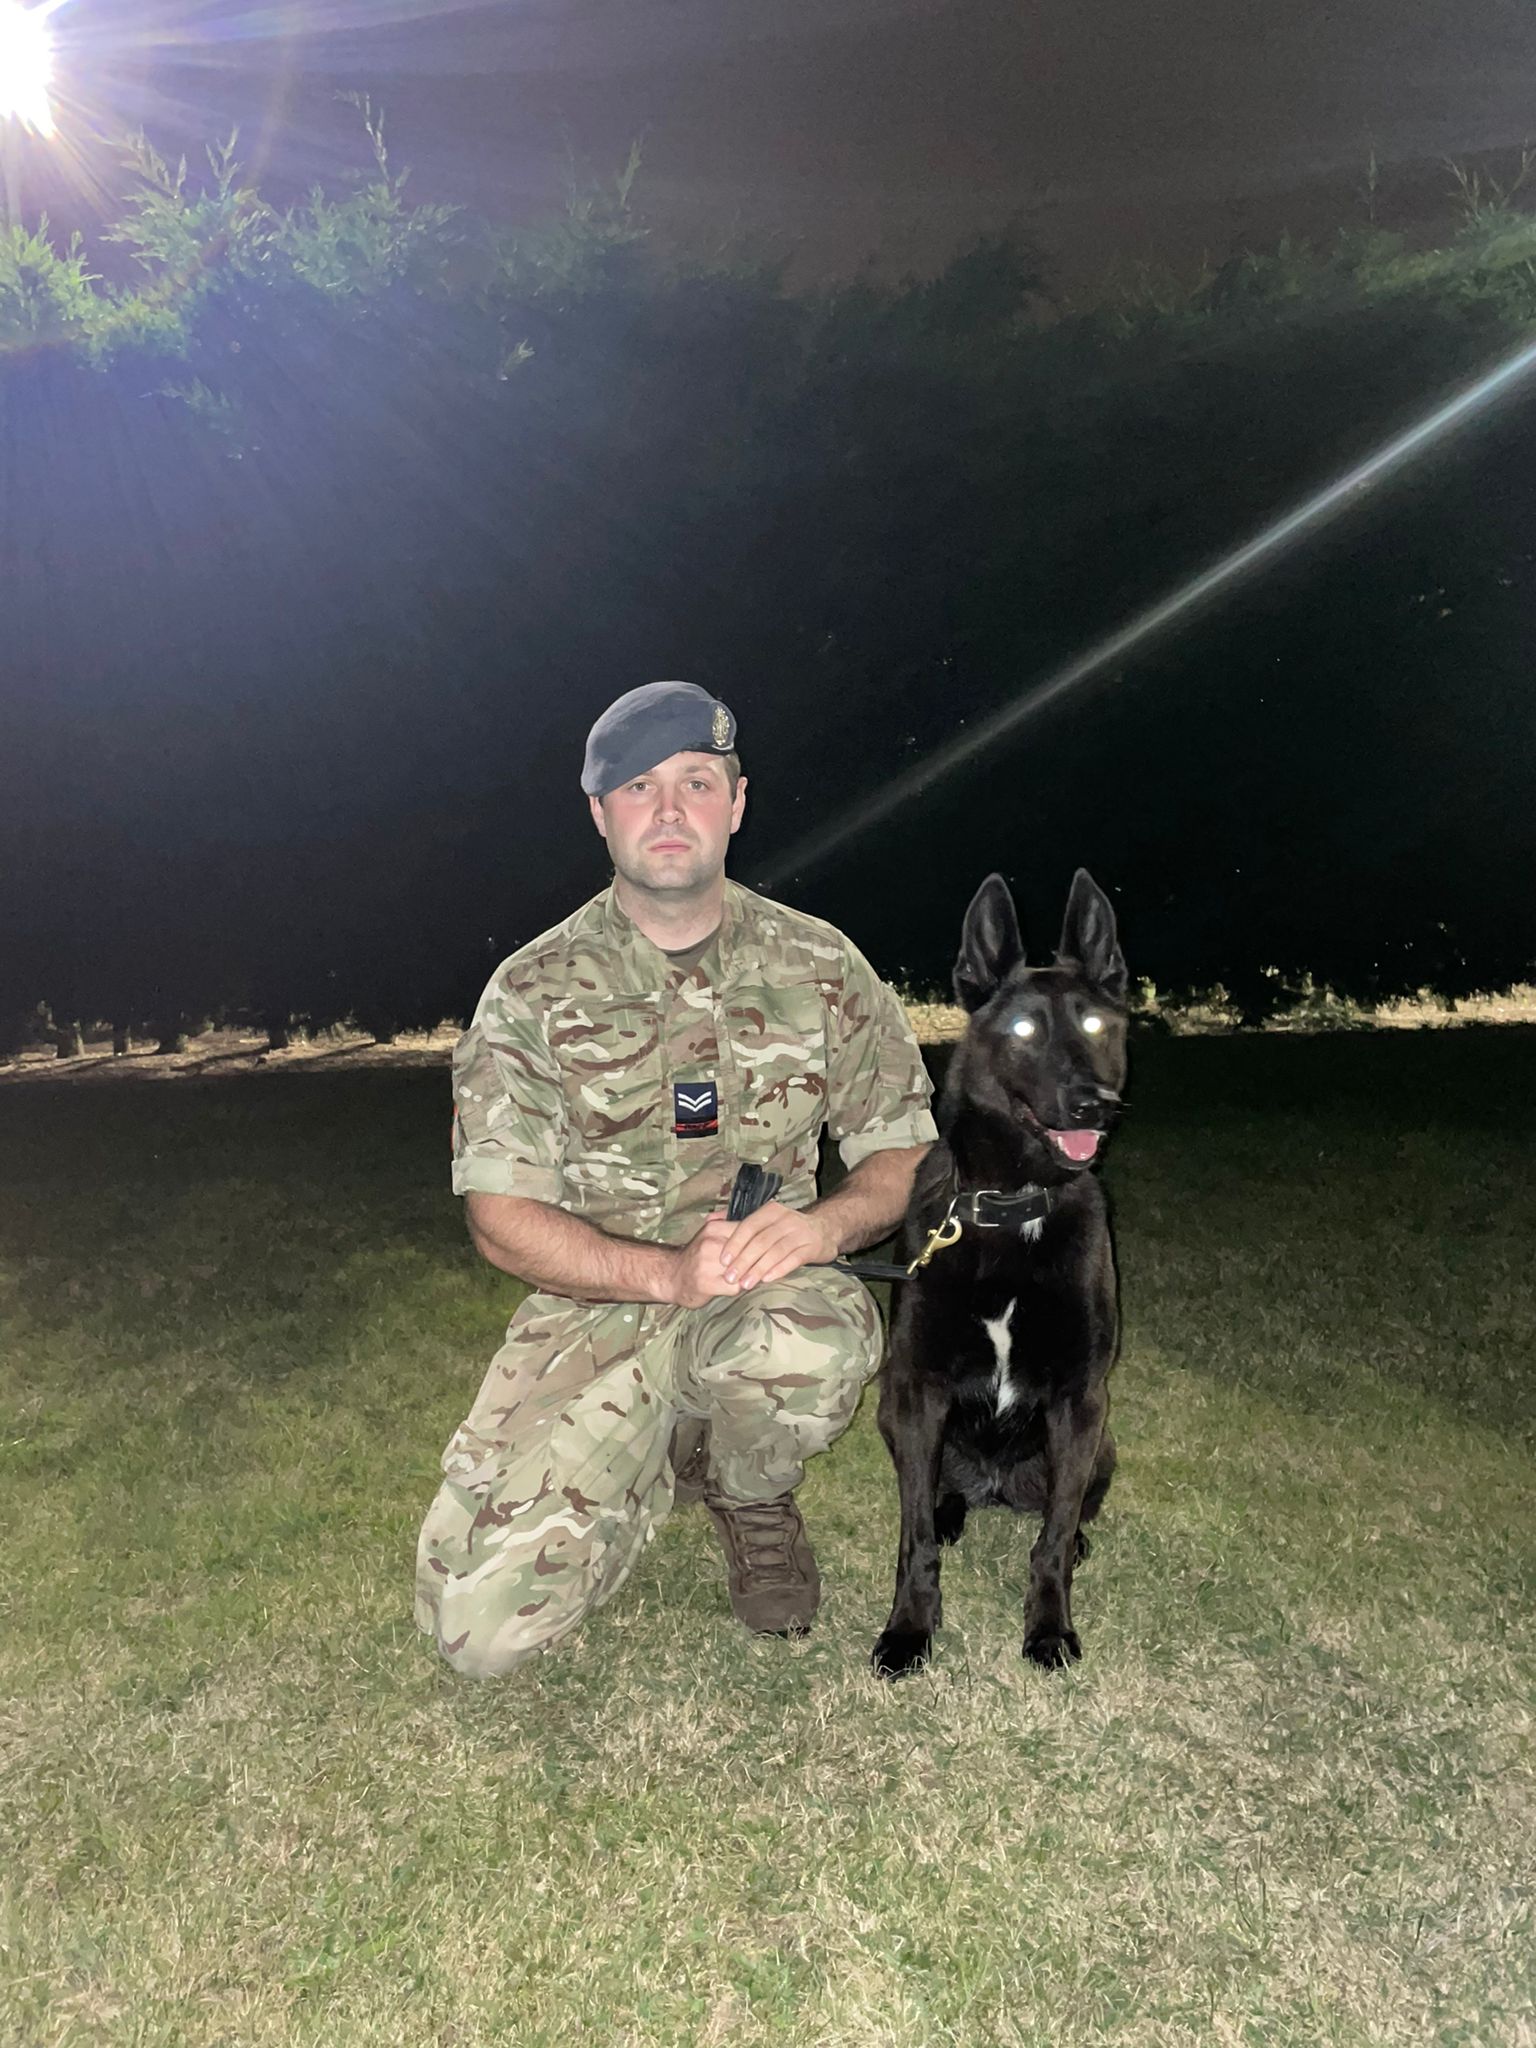 RAF Police Handler and dog at night.